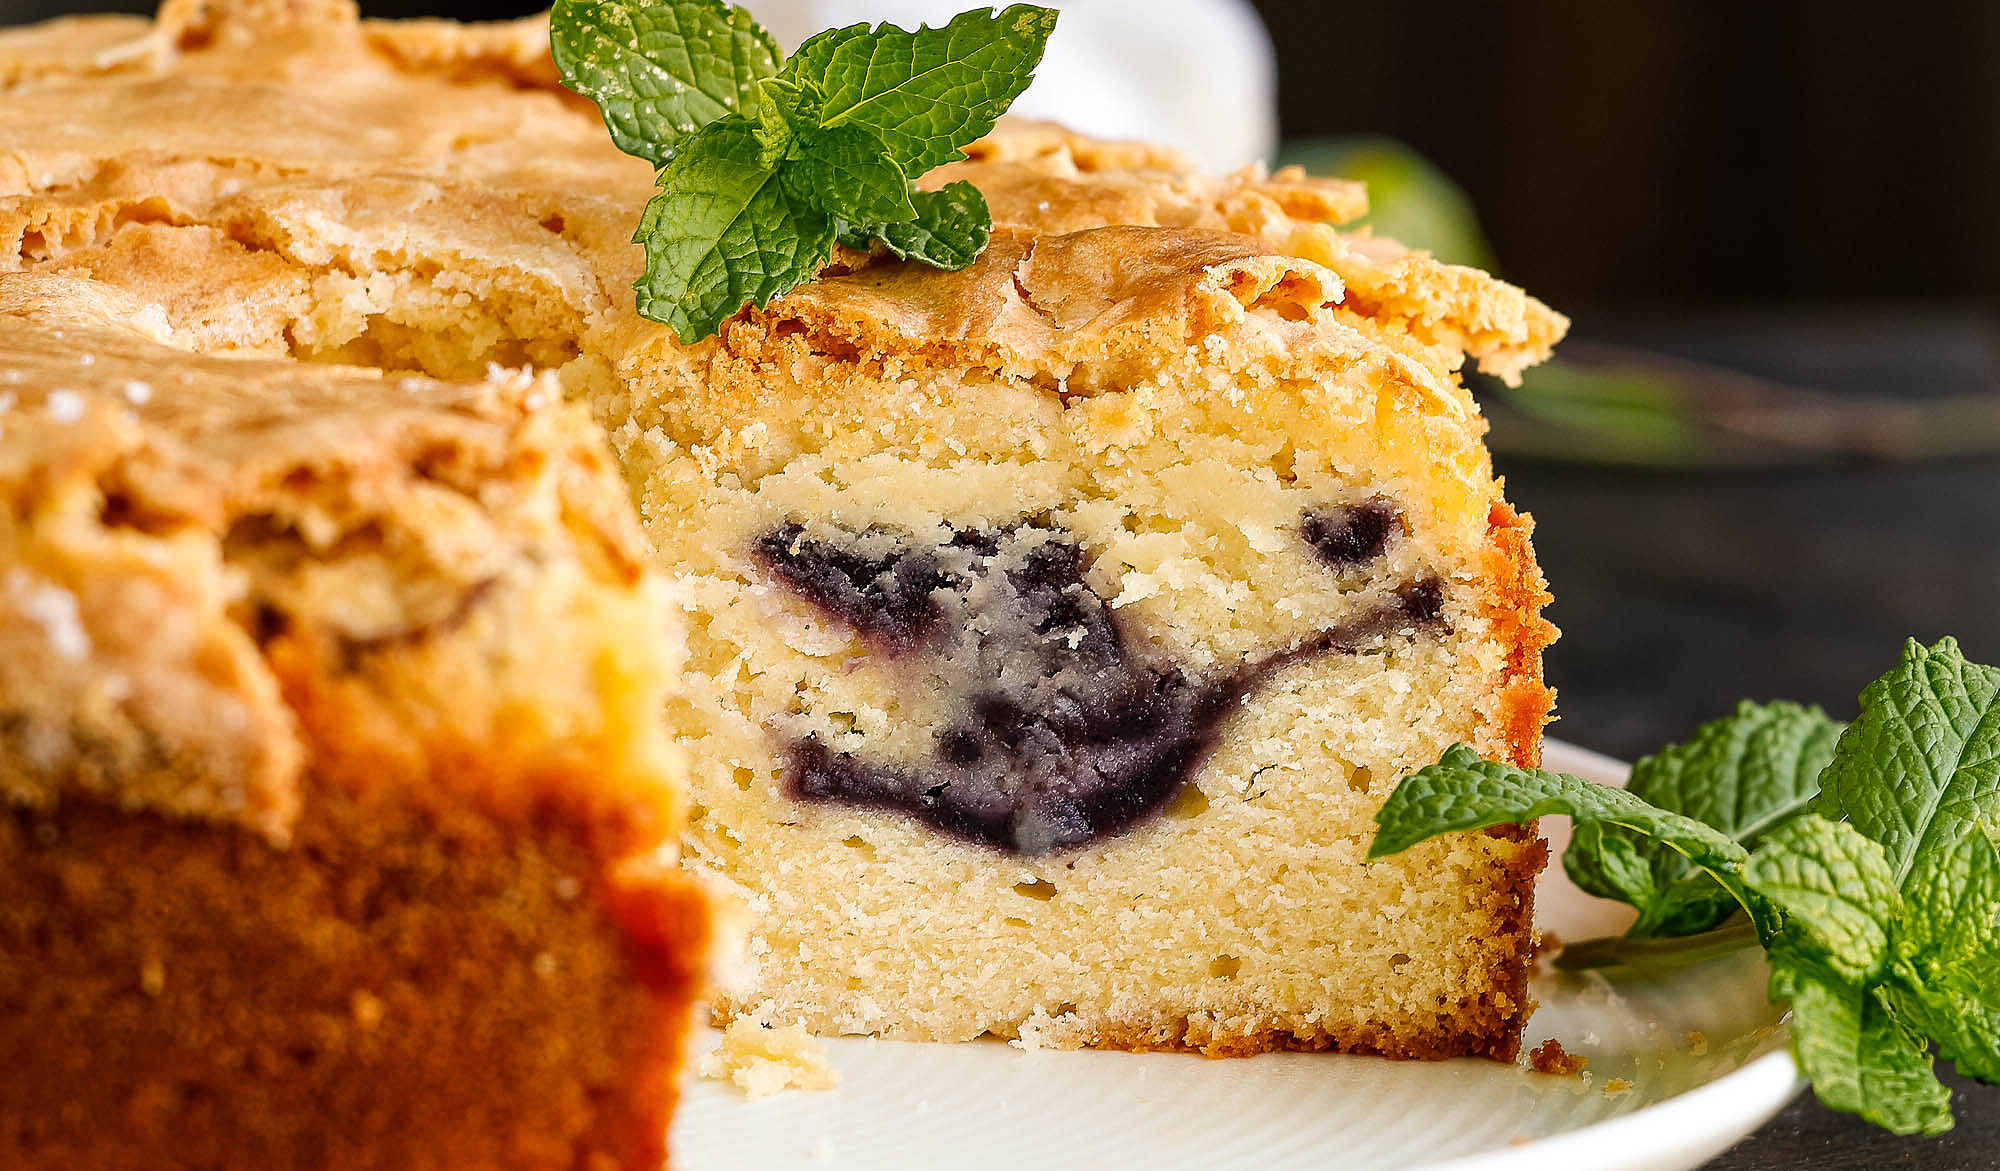 Tasty Sweet Dessert. White Glaze Cake with Blueberries on Light Stock Image  - Image of blueberry, chocolate: 120283707